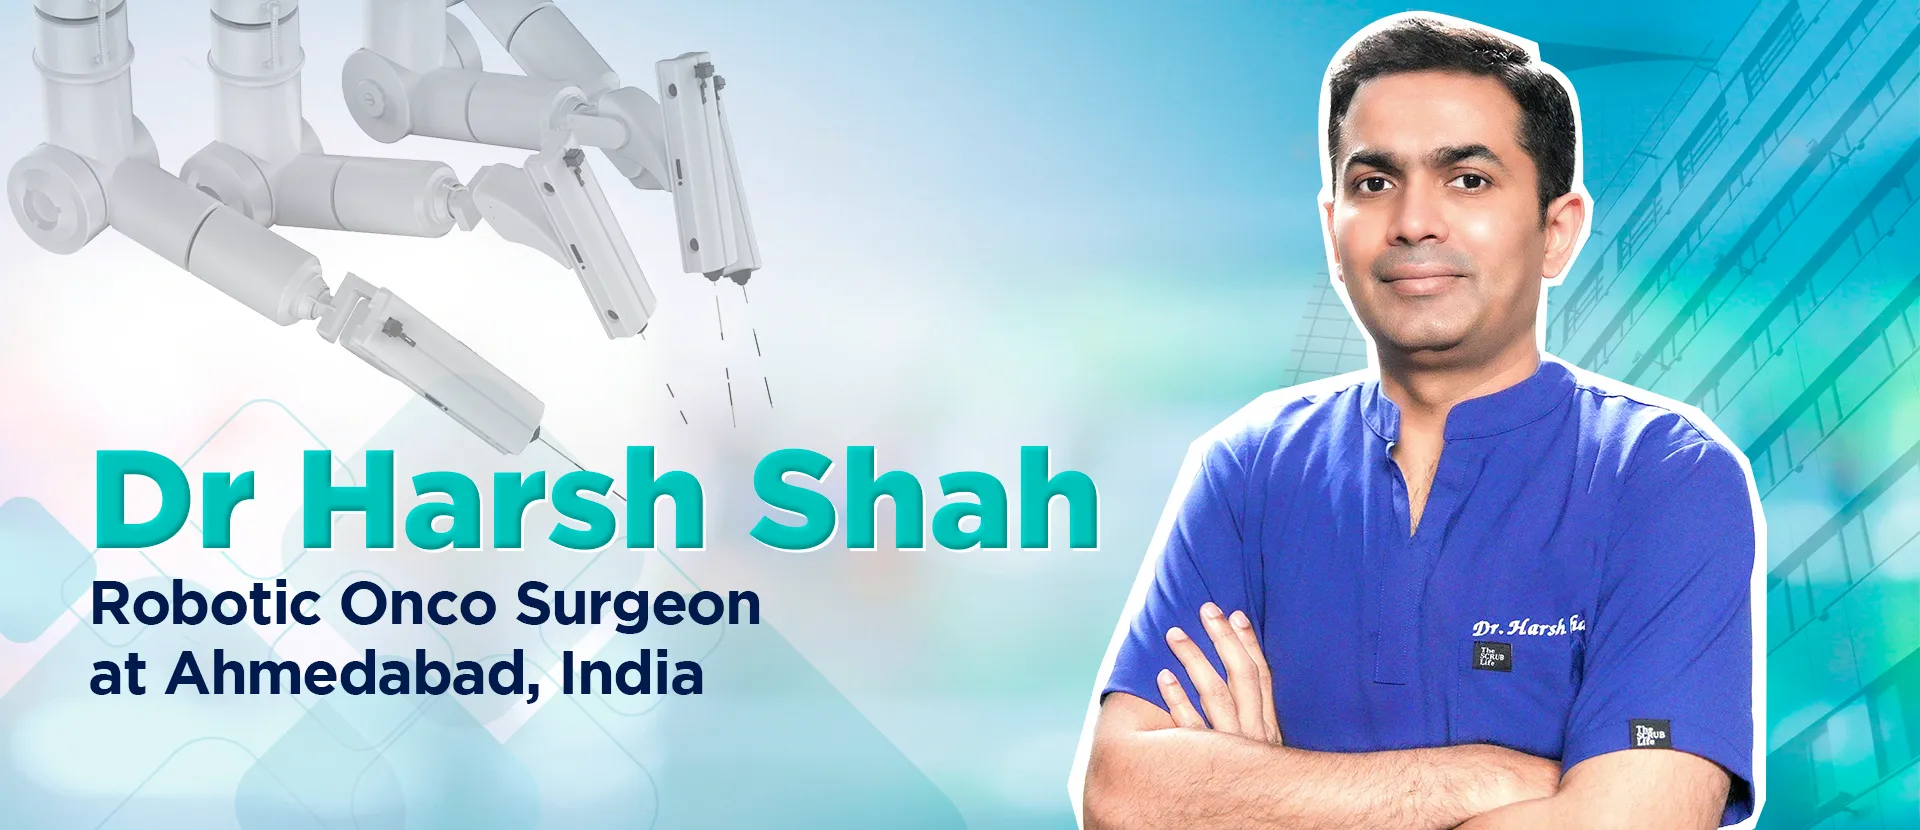 Dr Harsh Shah - Best Robotic Onco Surgeon in Ahmedabad, Gujarat India